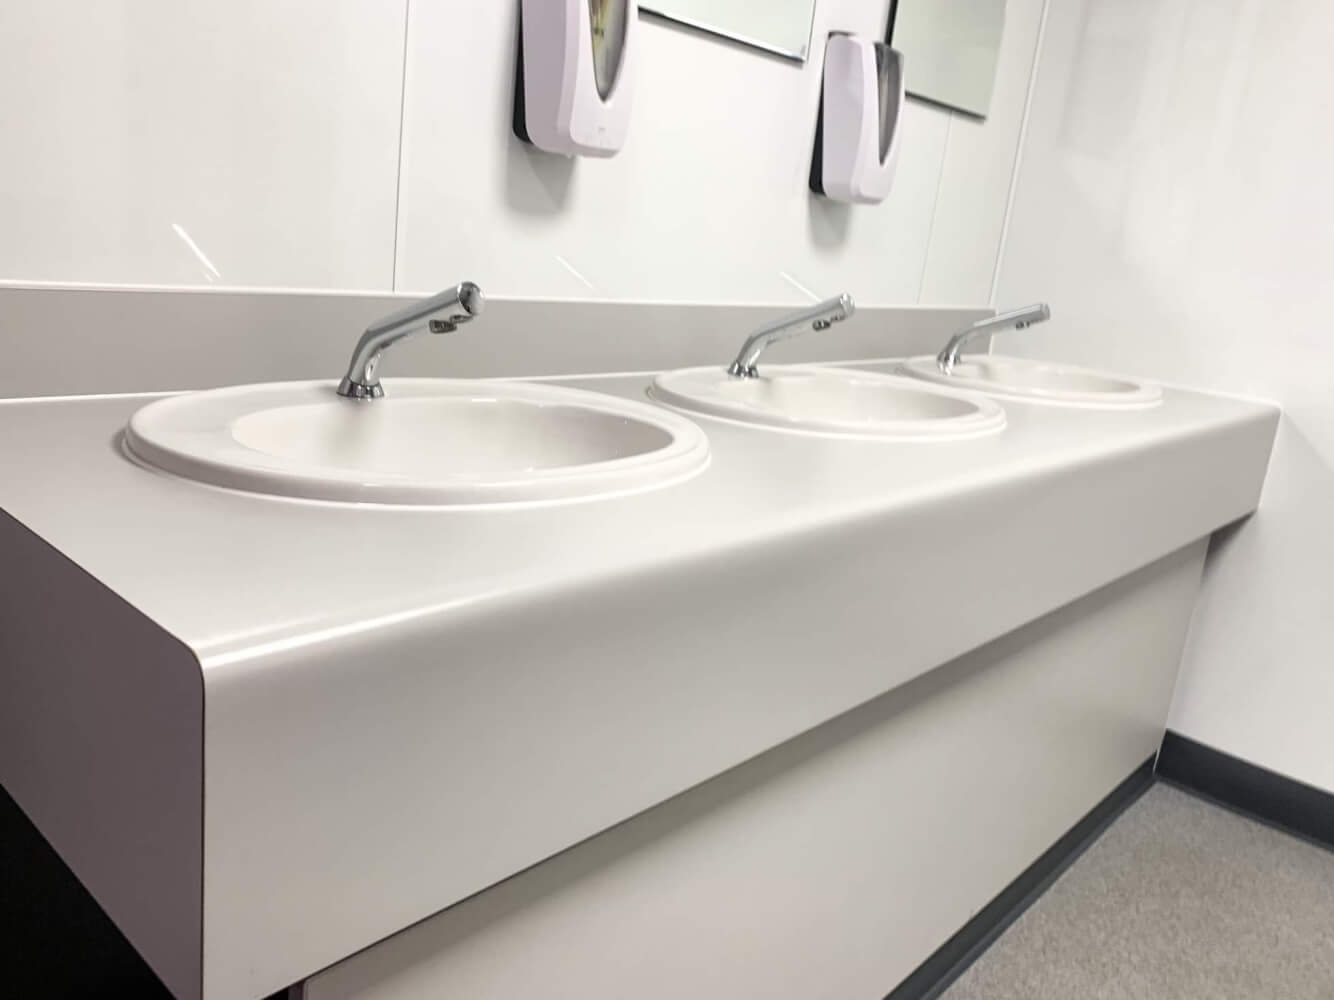 ex display bathroom vanity units